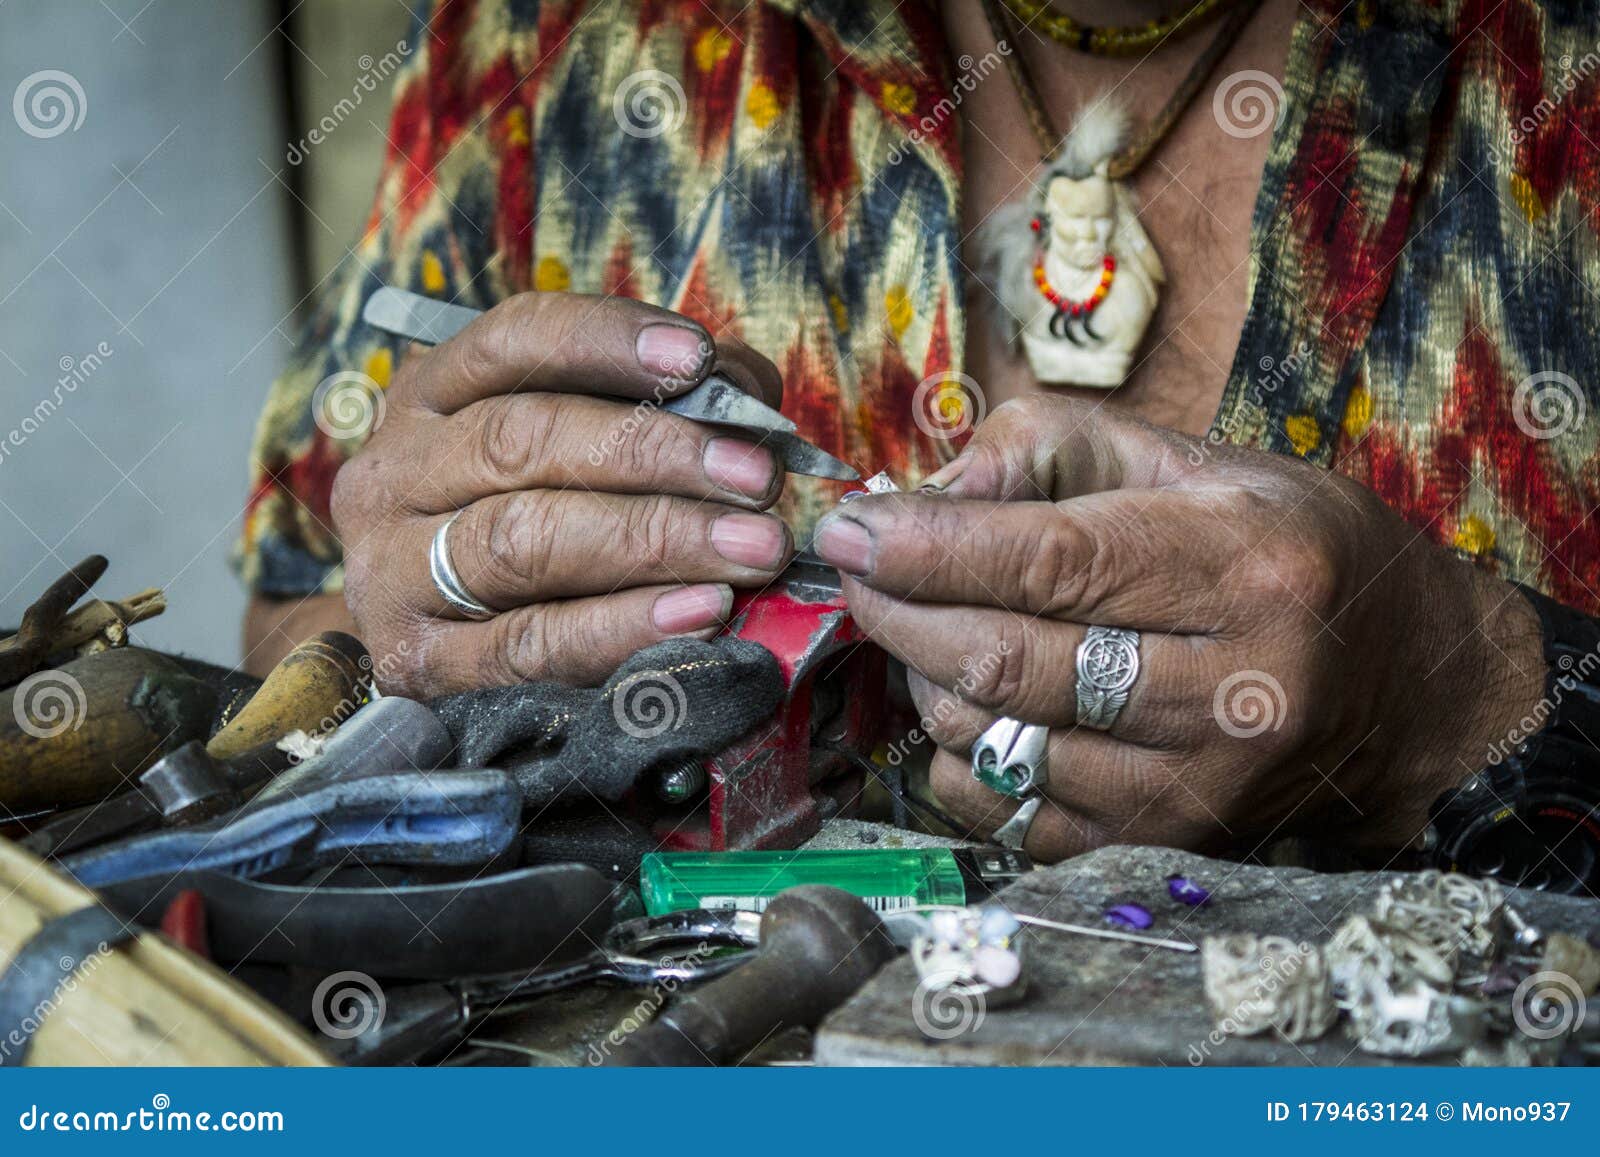 jeweler`s hands working on his craft